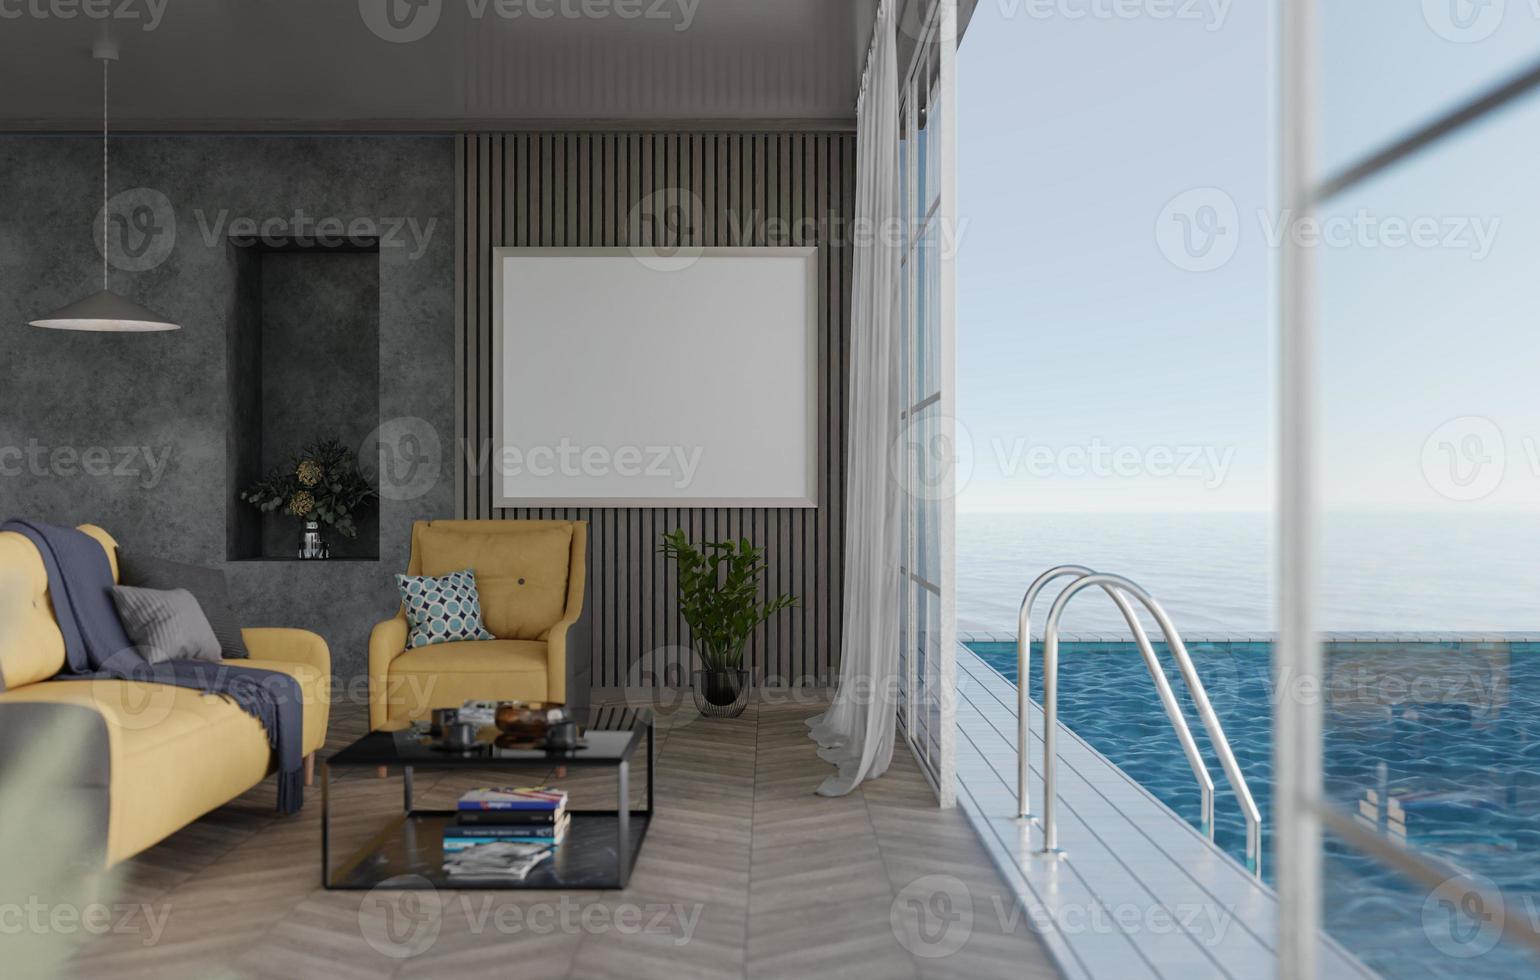 3D mockup blank photo frame in living room rendering